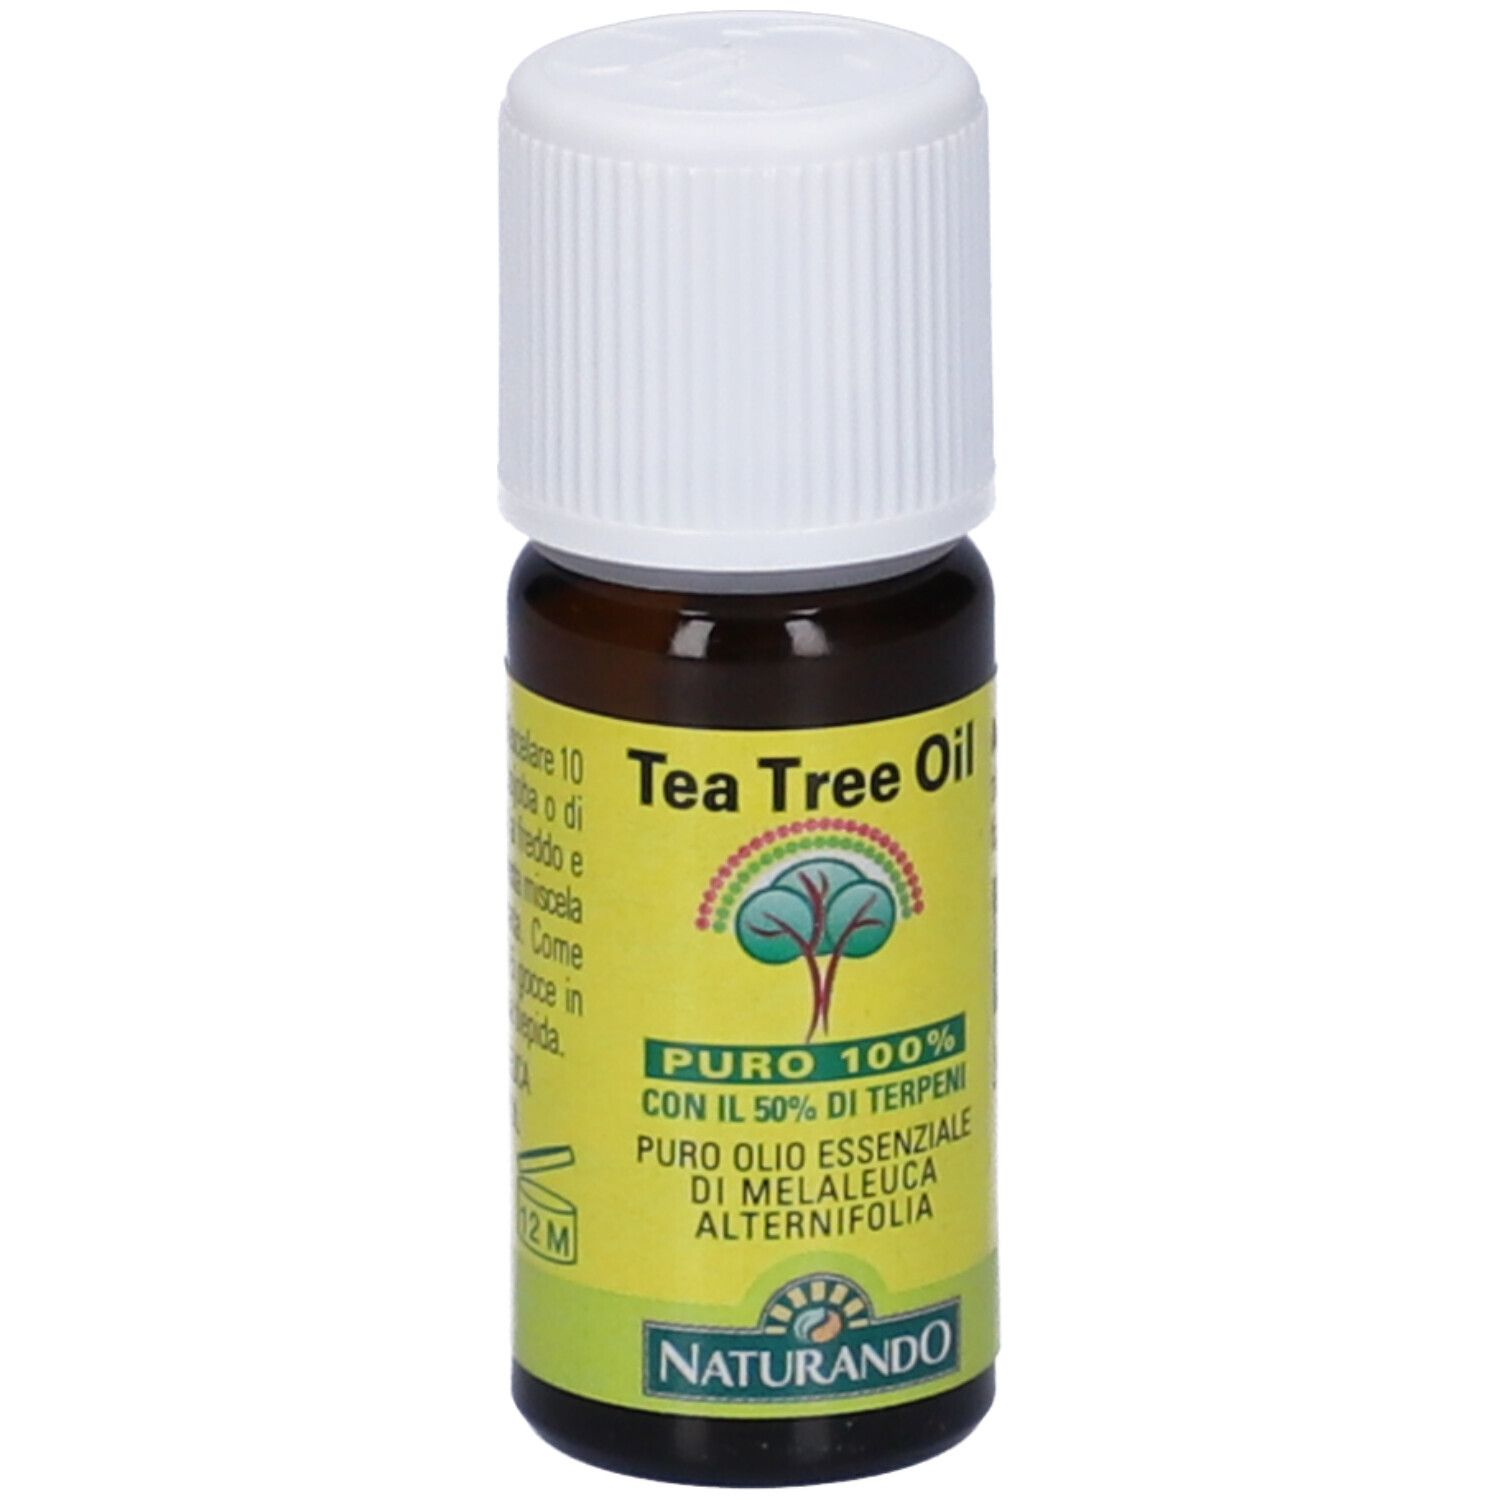 Tea Tree Oil Puro 100%